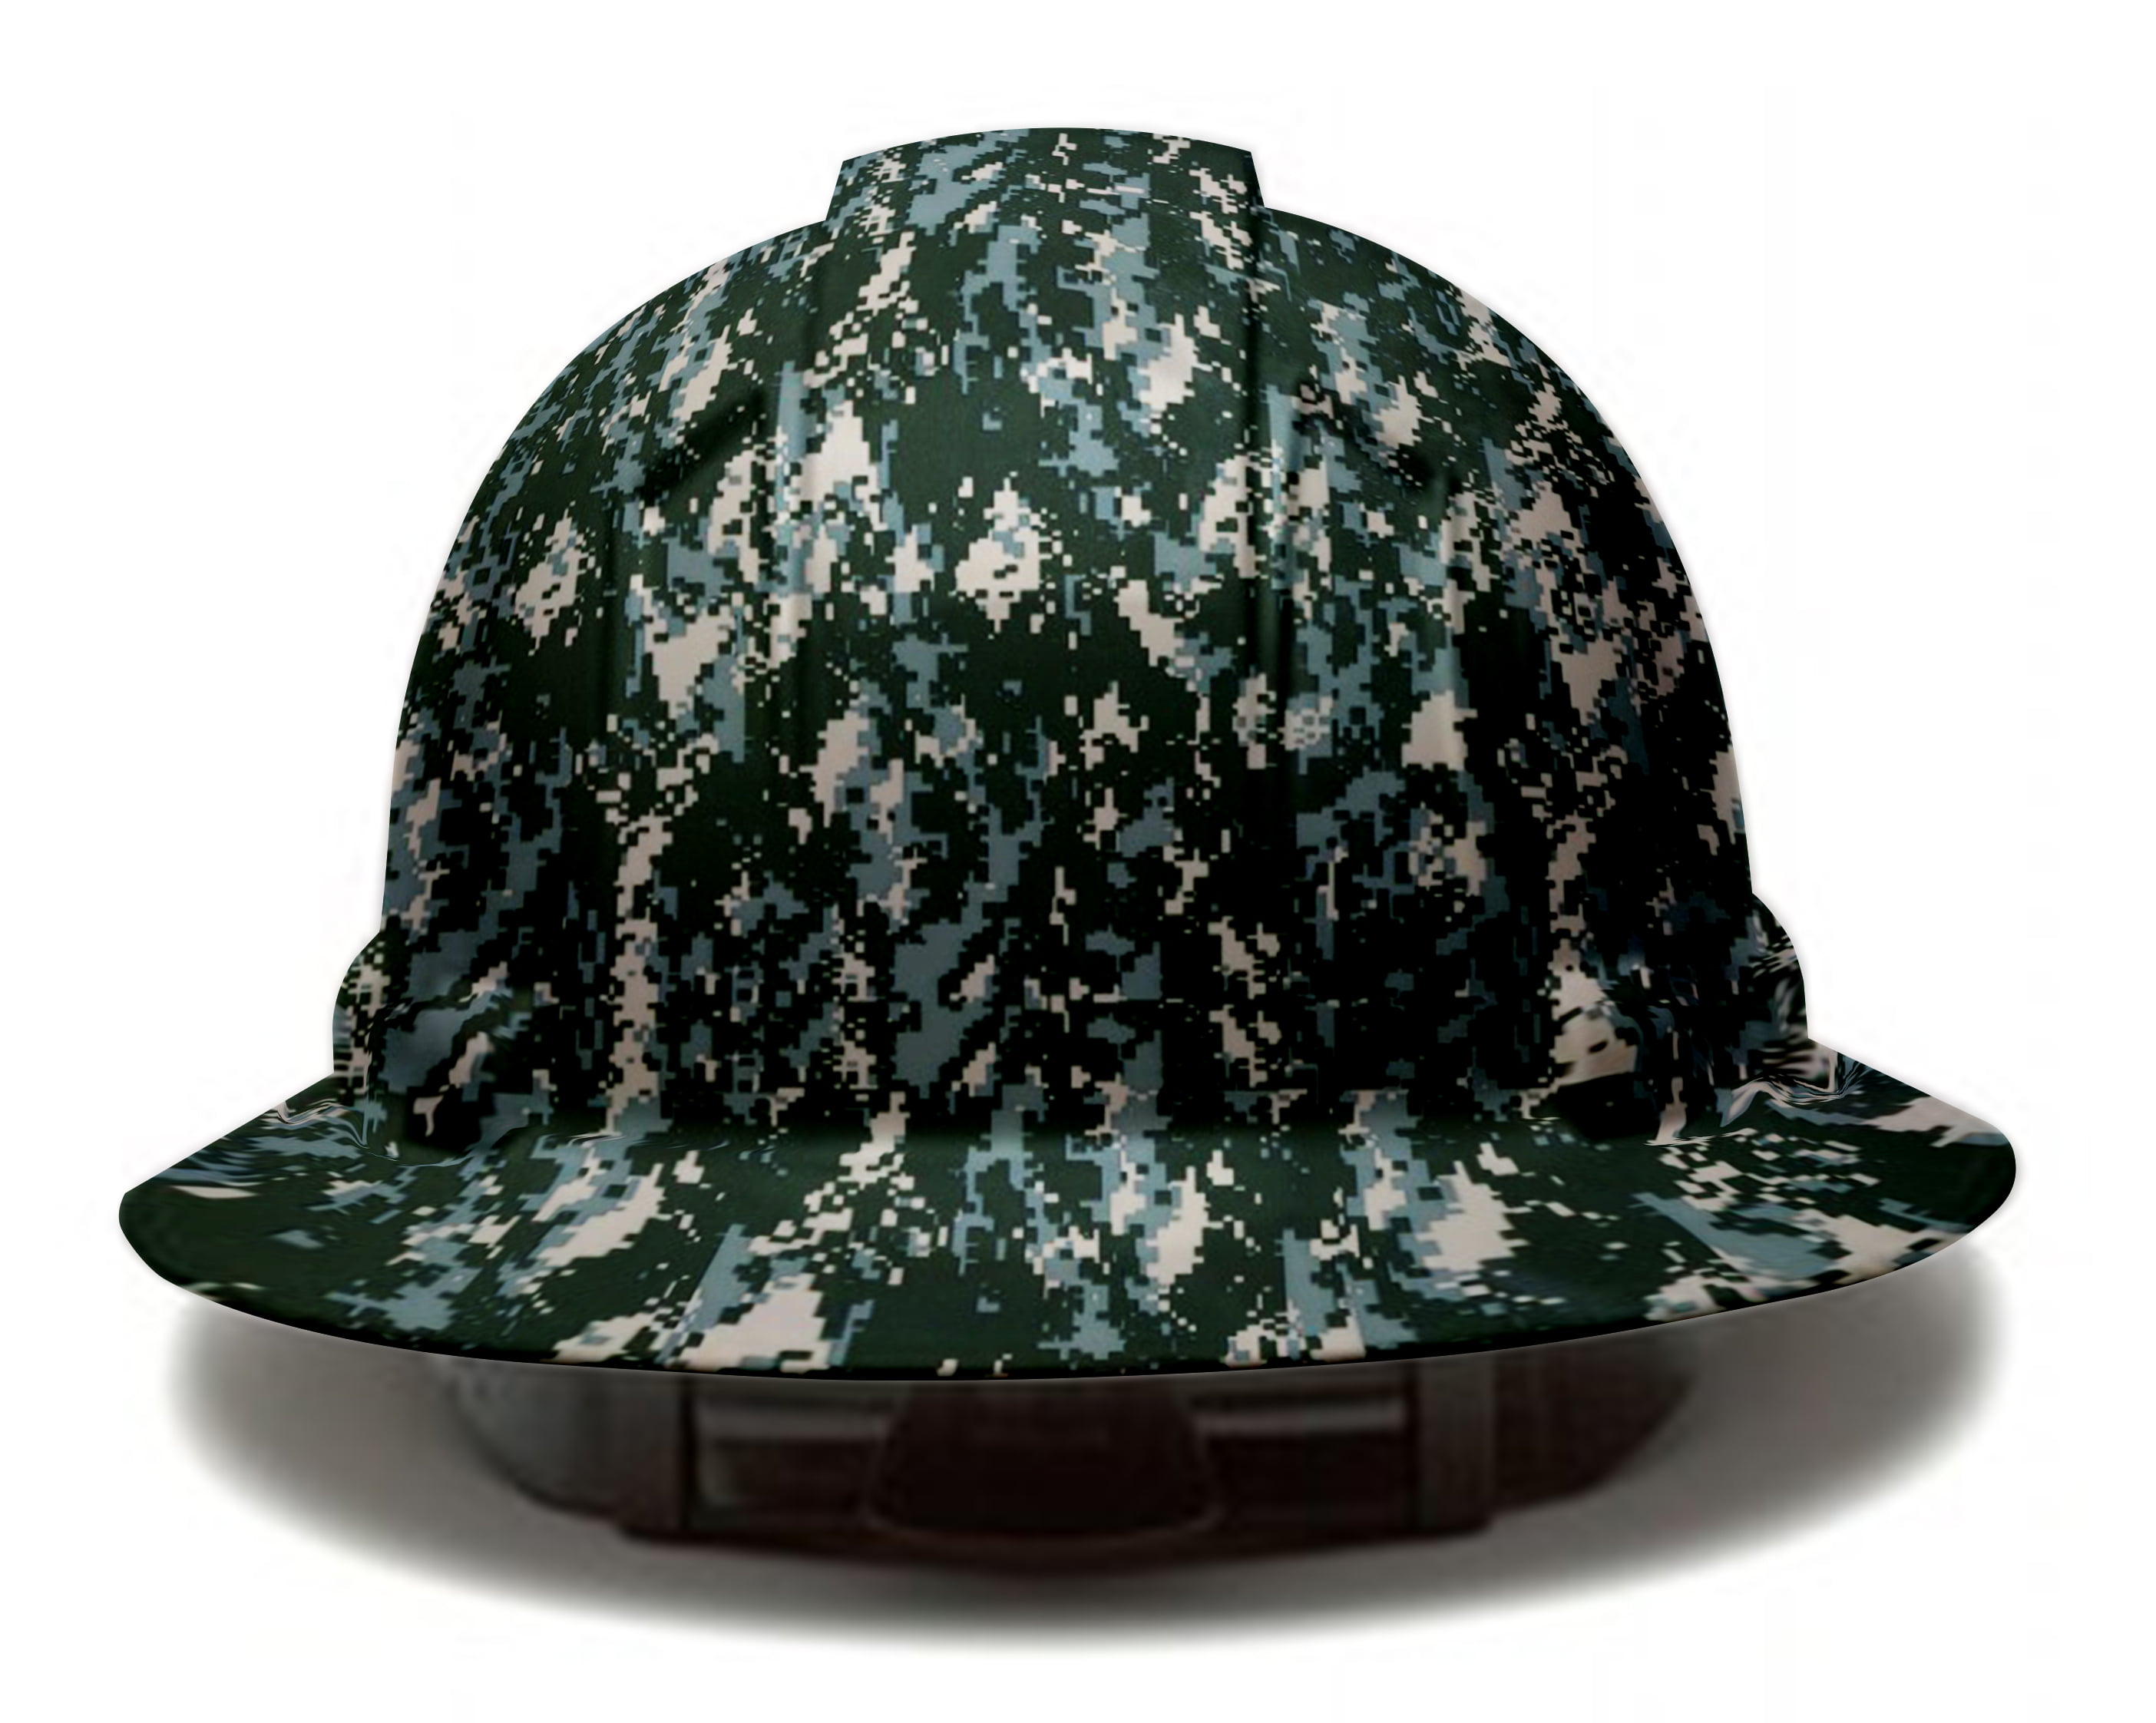 Full Brim Pyramex Hard Hat by Acerpal Dark Patriotic Evil Clown Design Safety Helmet 4pt